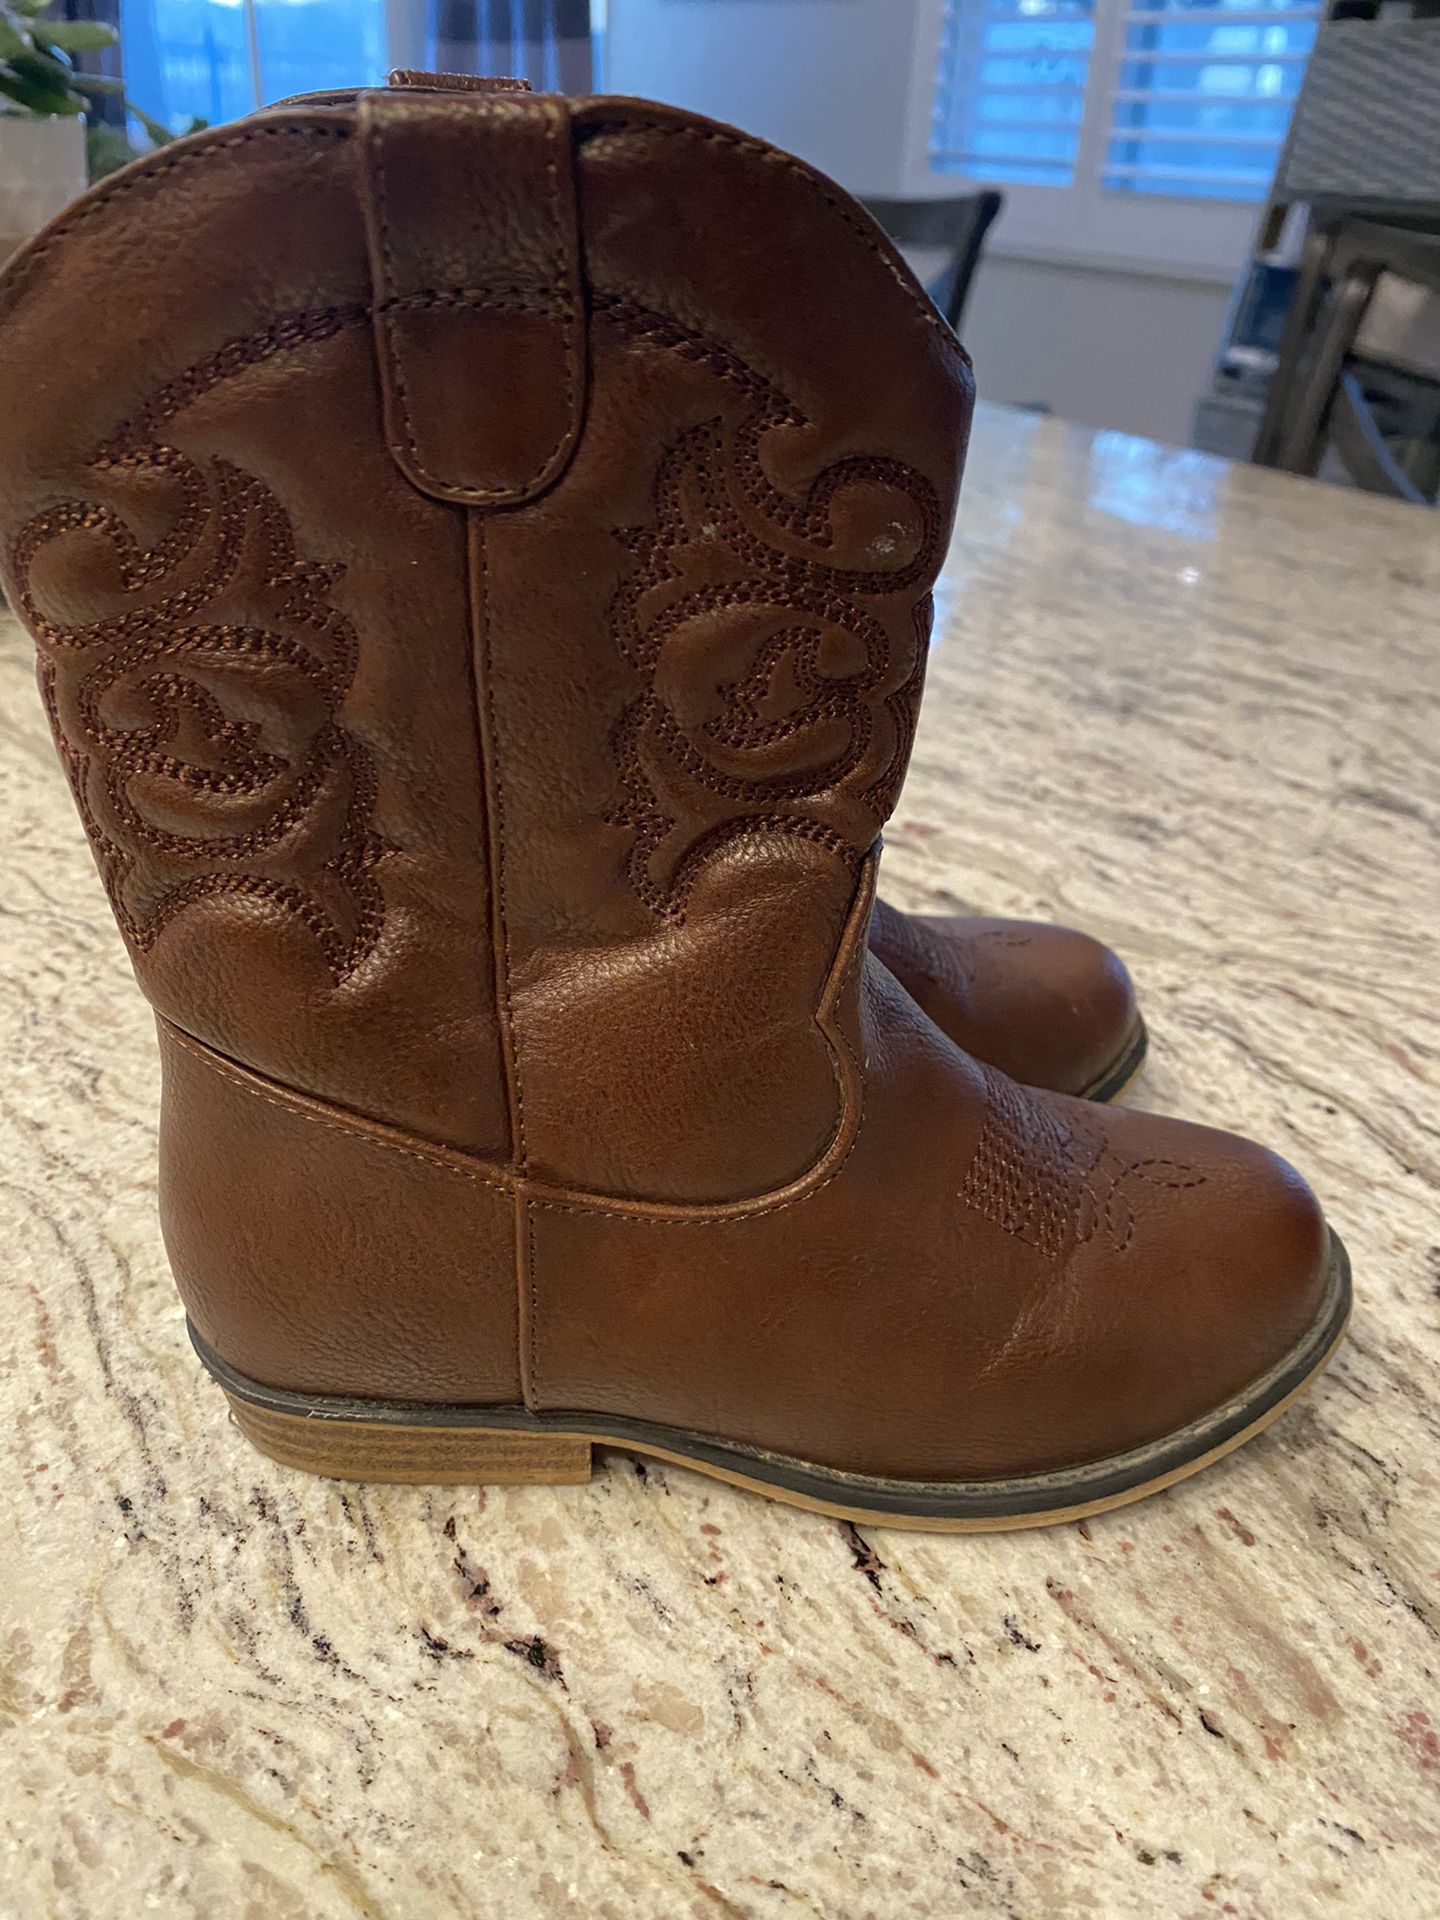 Girls Cowboy Boots Size 11